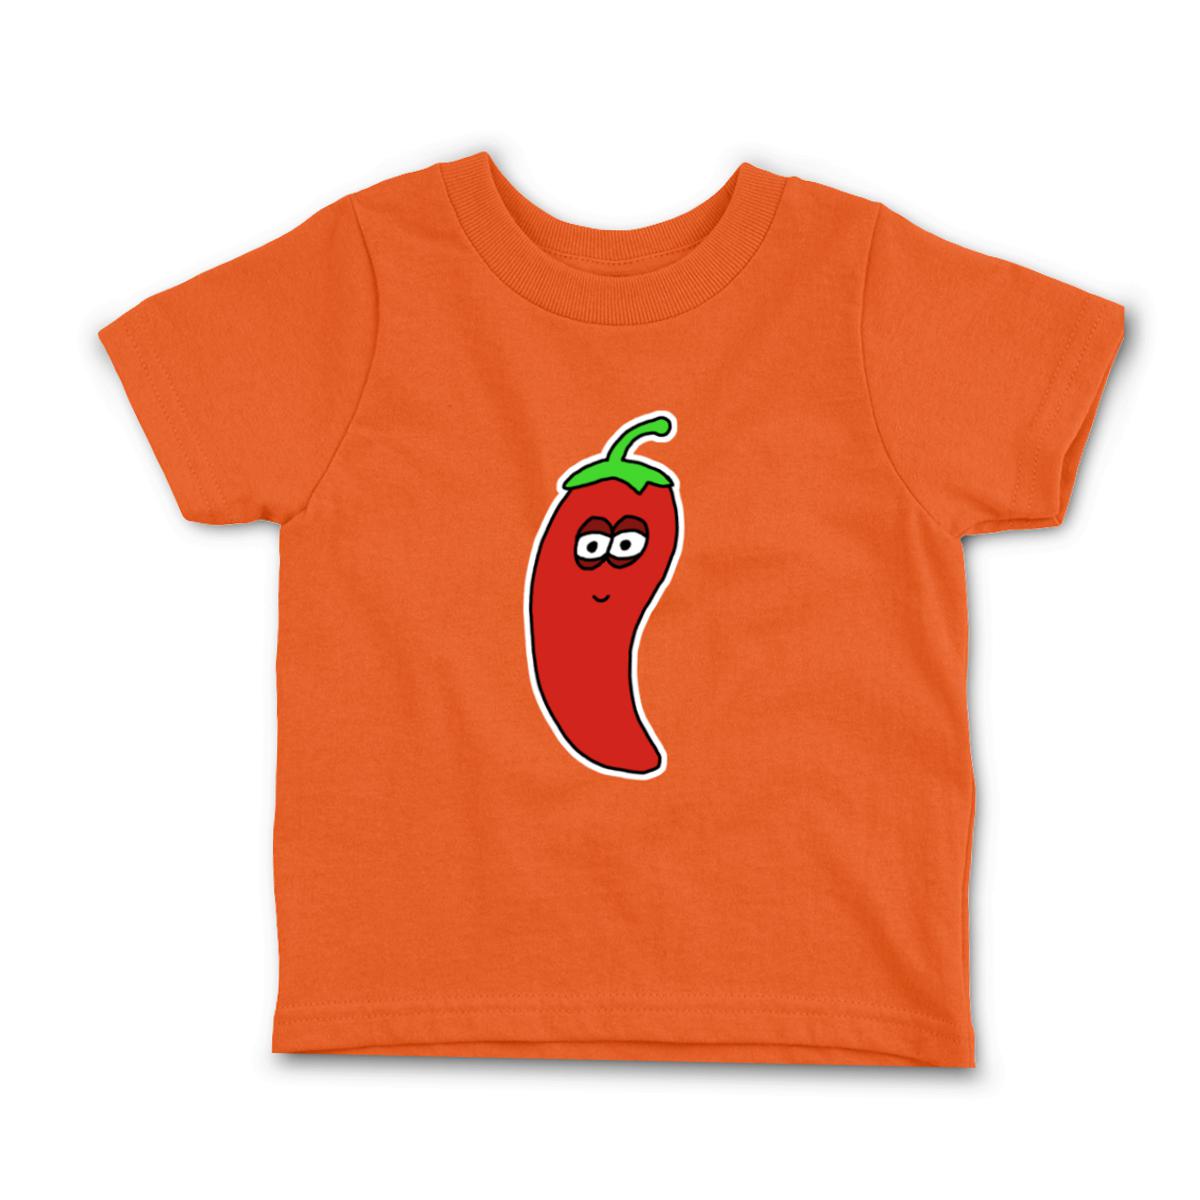 Chili Pepper Infant Tee 18M orange